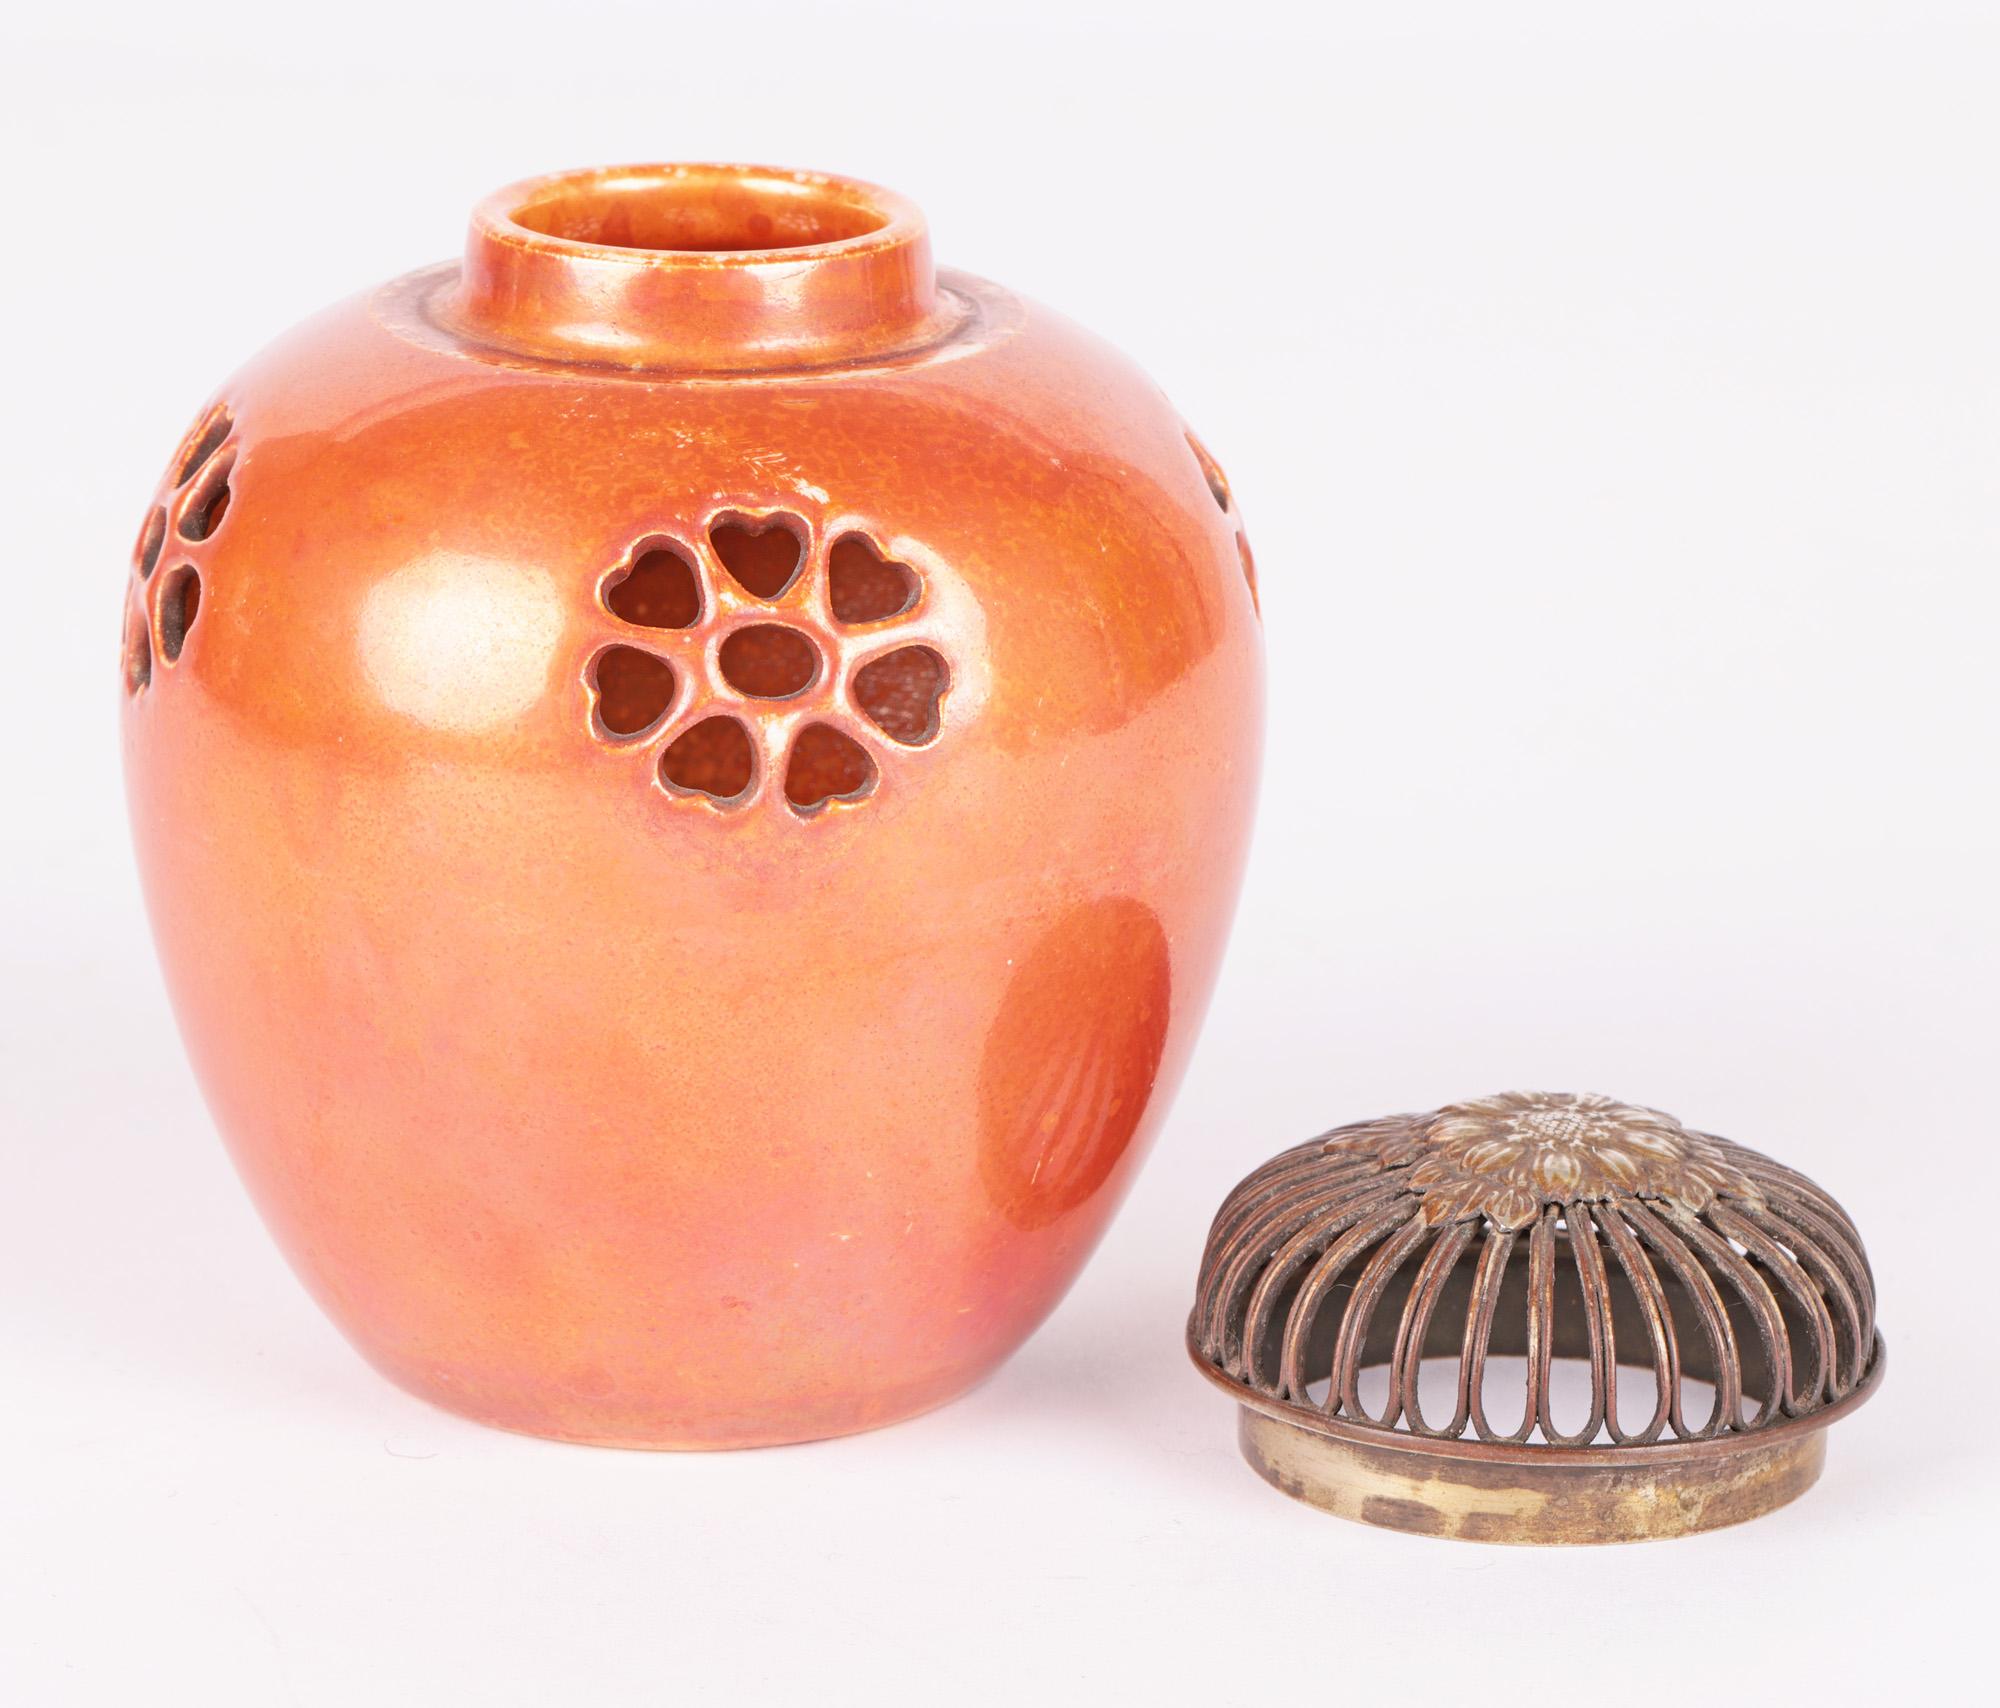 Ruskin Art Deco Orange Lustre Glazed Pierced Pot-Pourri Lidded Vase In Good Condition For Sale In Bishop's Stortford, Hertfordshire